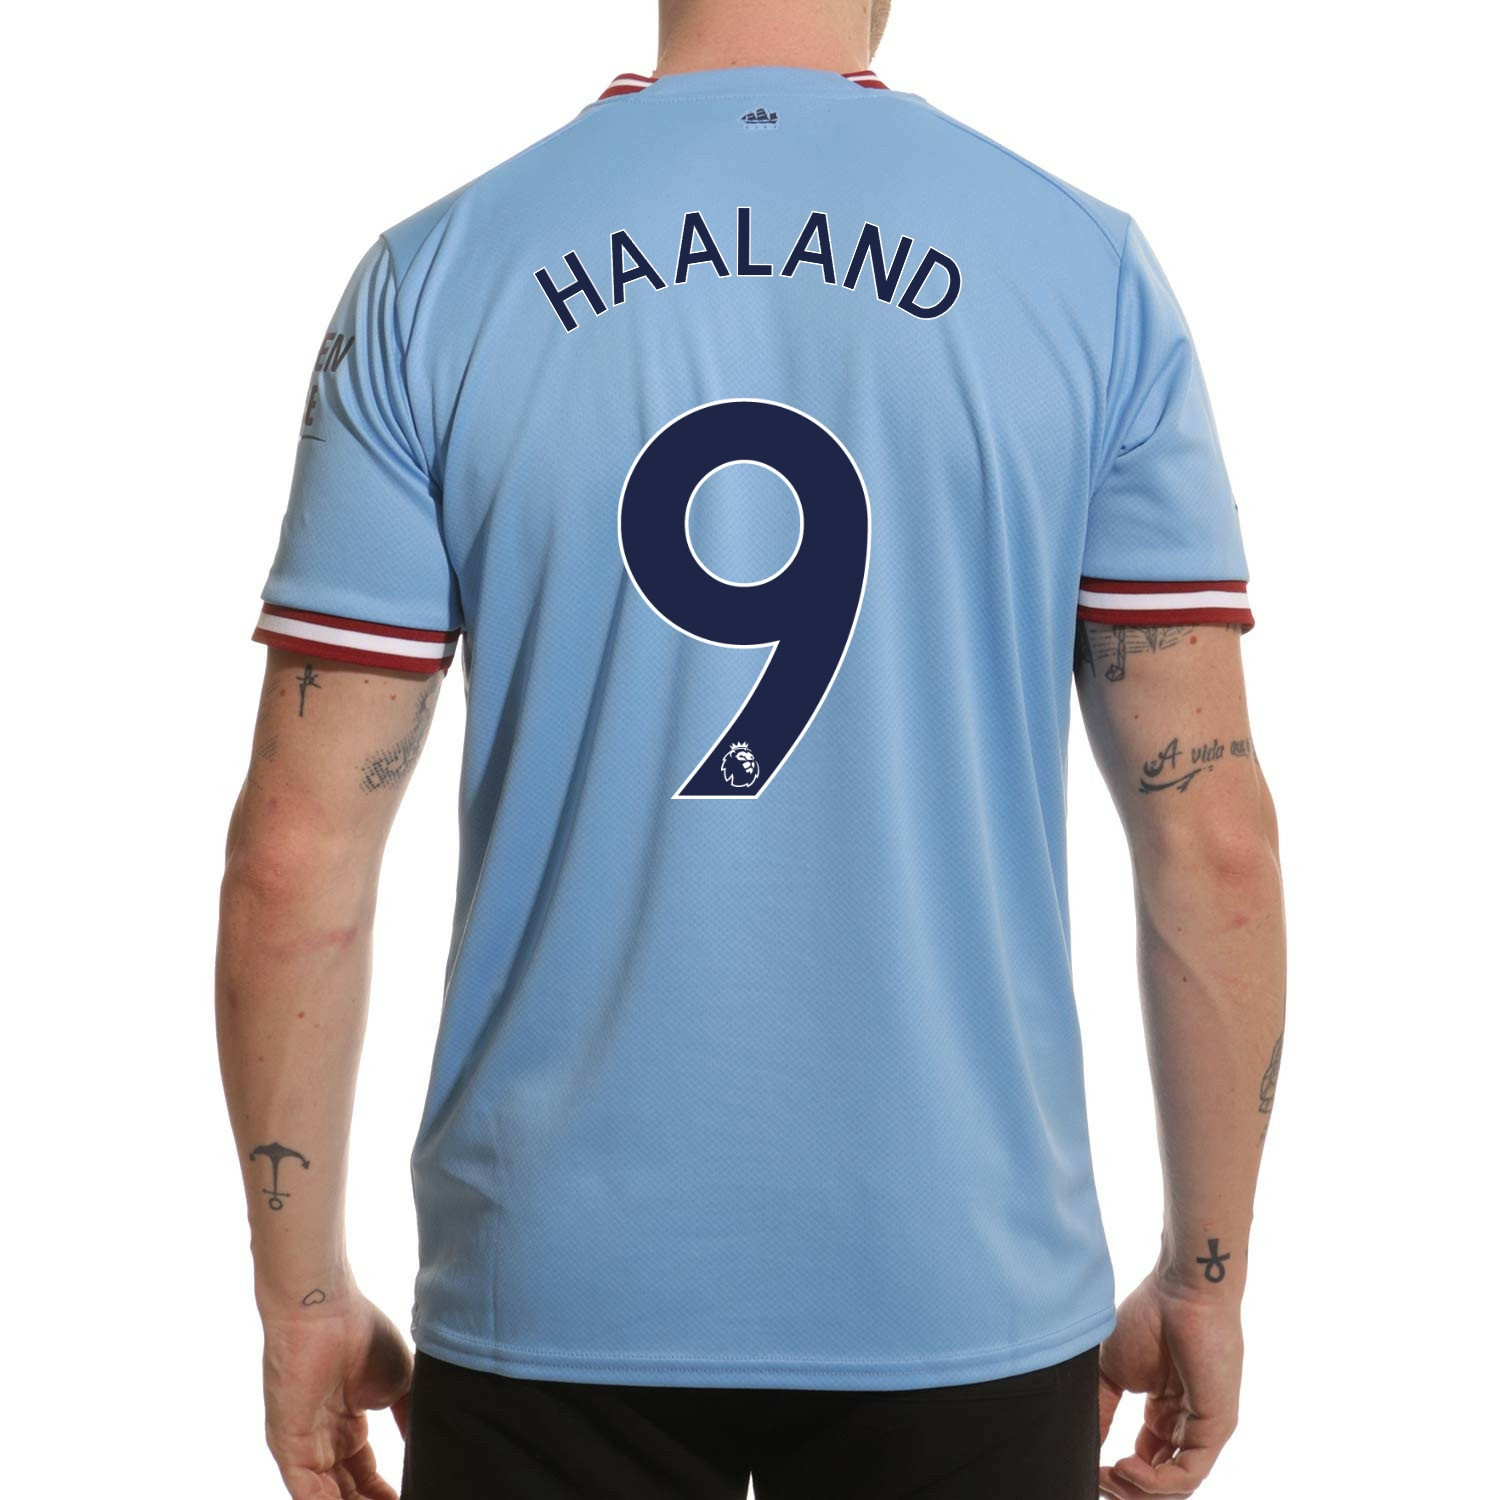 Camiseta Puma Manchester City 2022 2023 Haaland azul